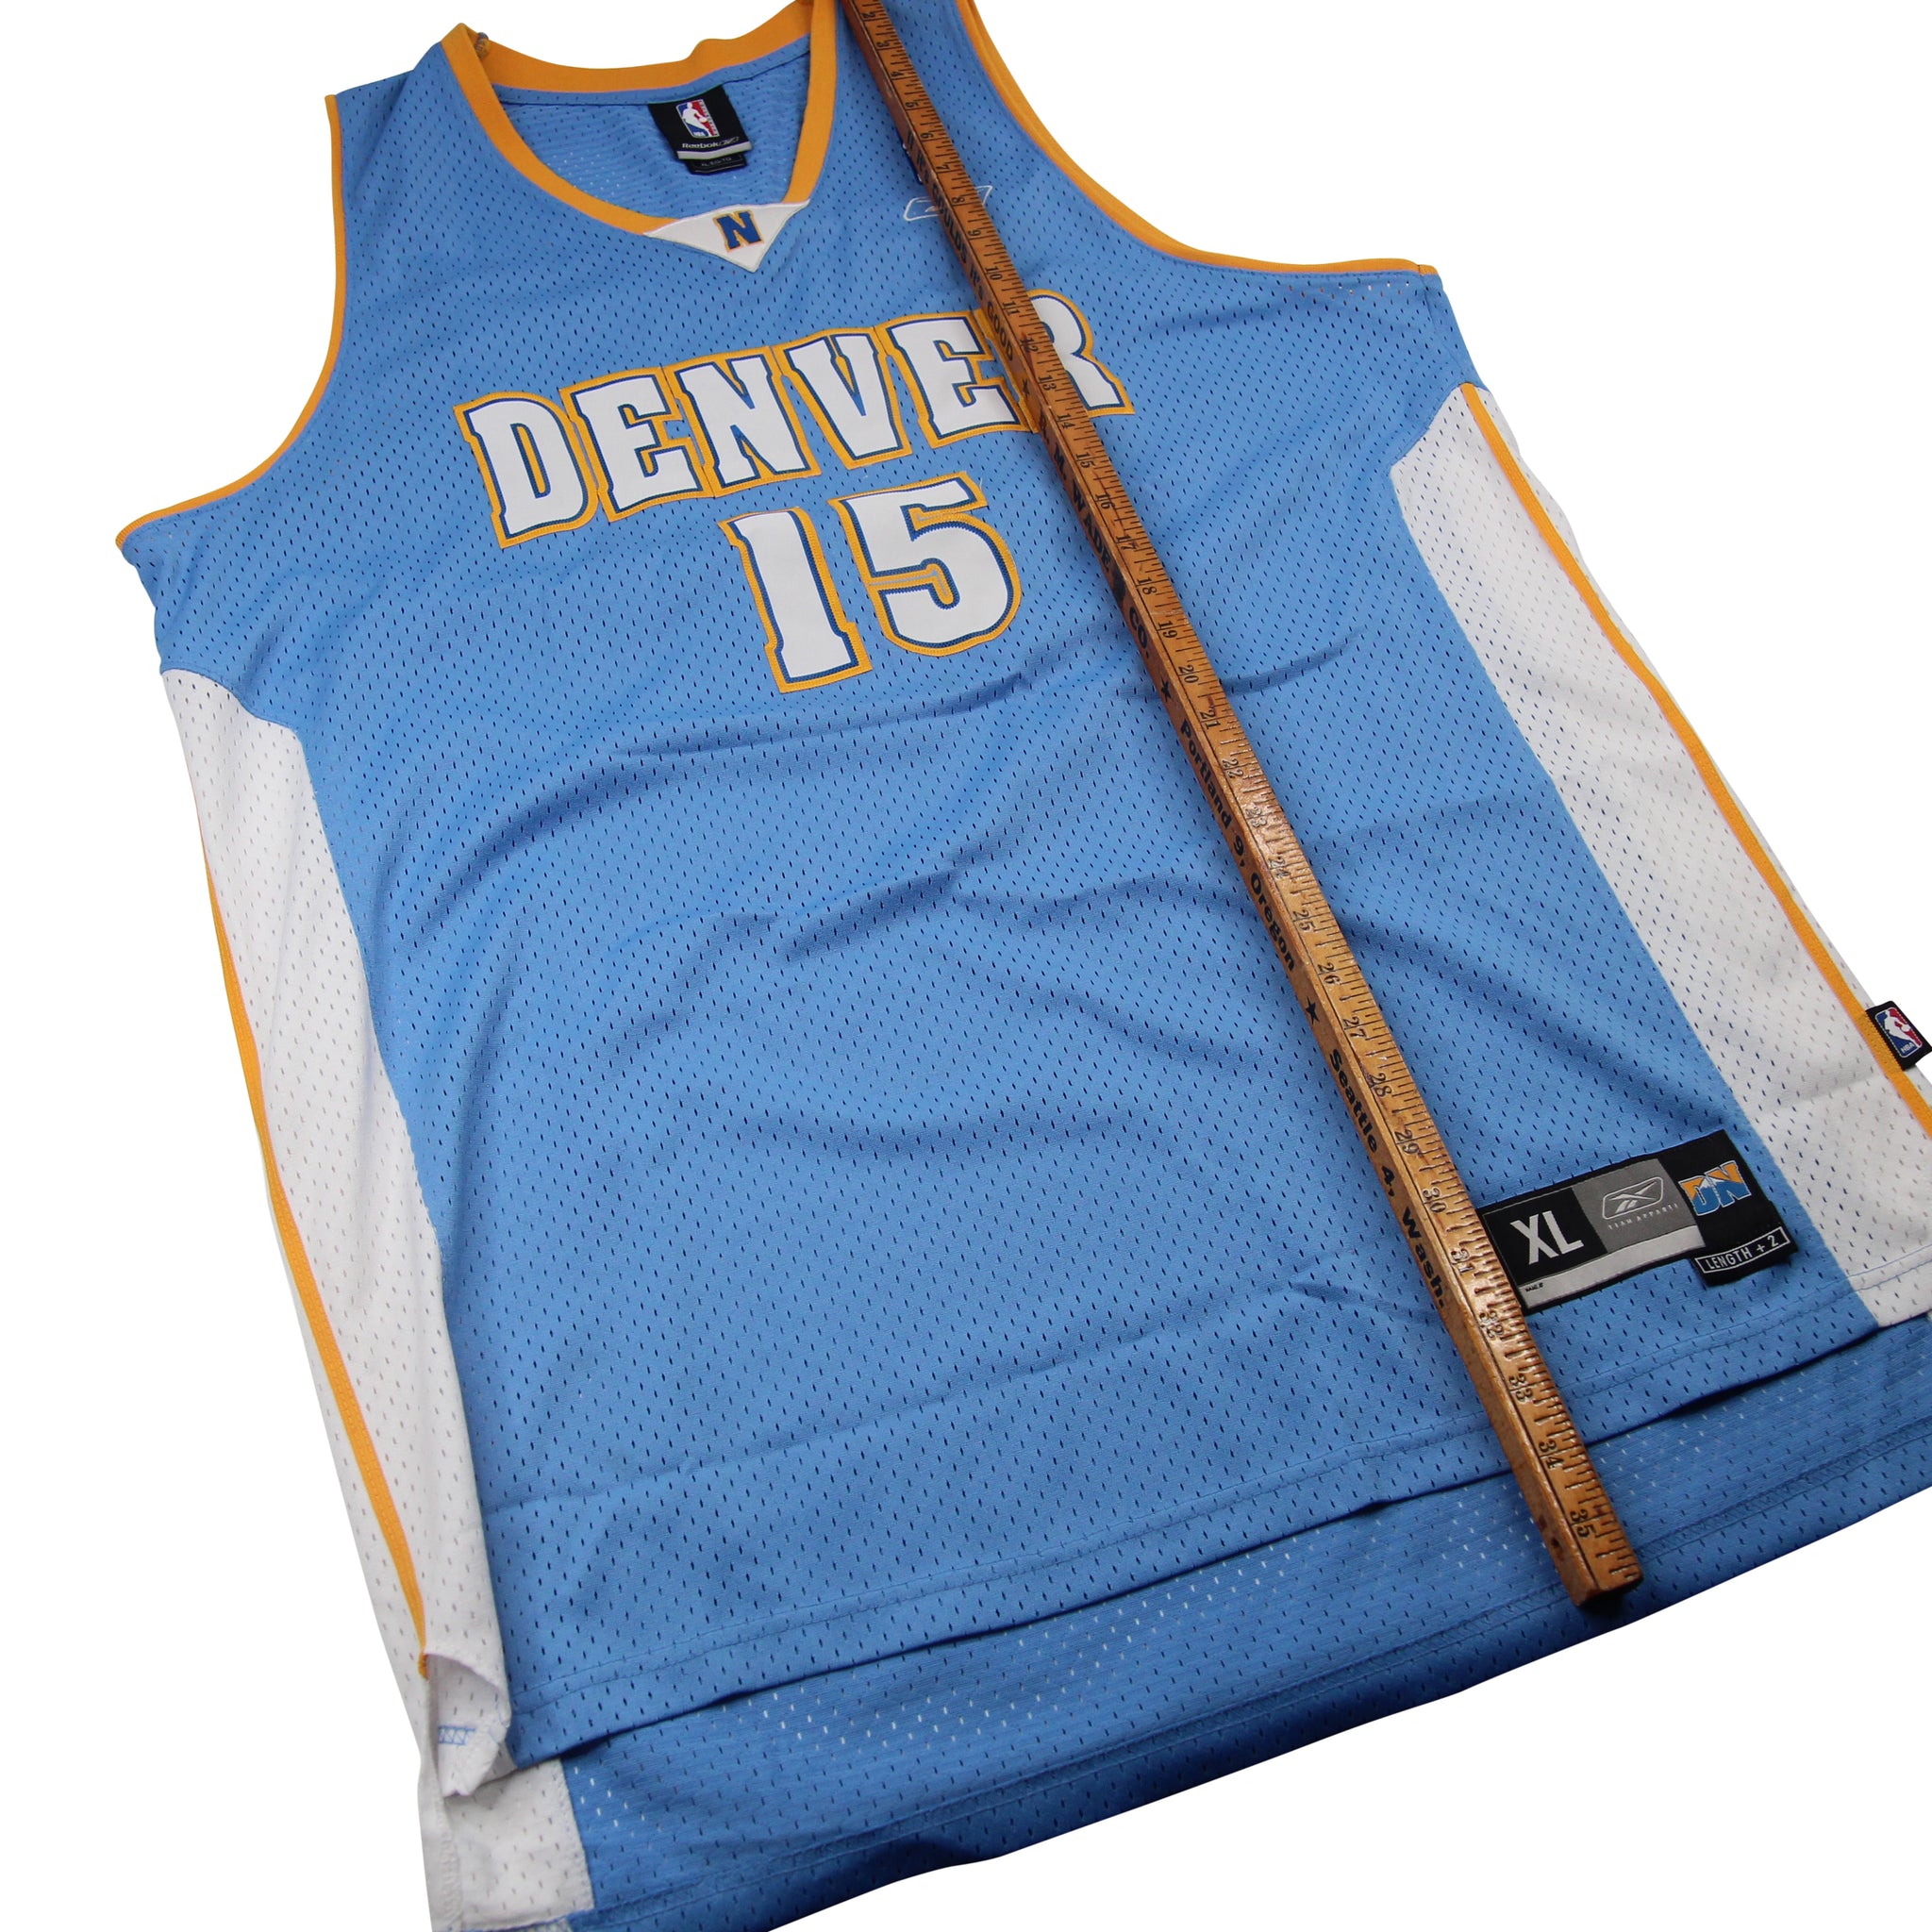 Denver Nuggets 15 Carmelo Anthony Blue Jersey